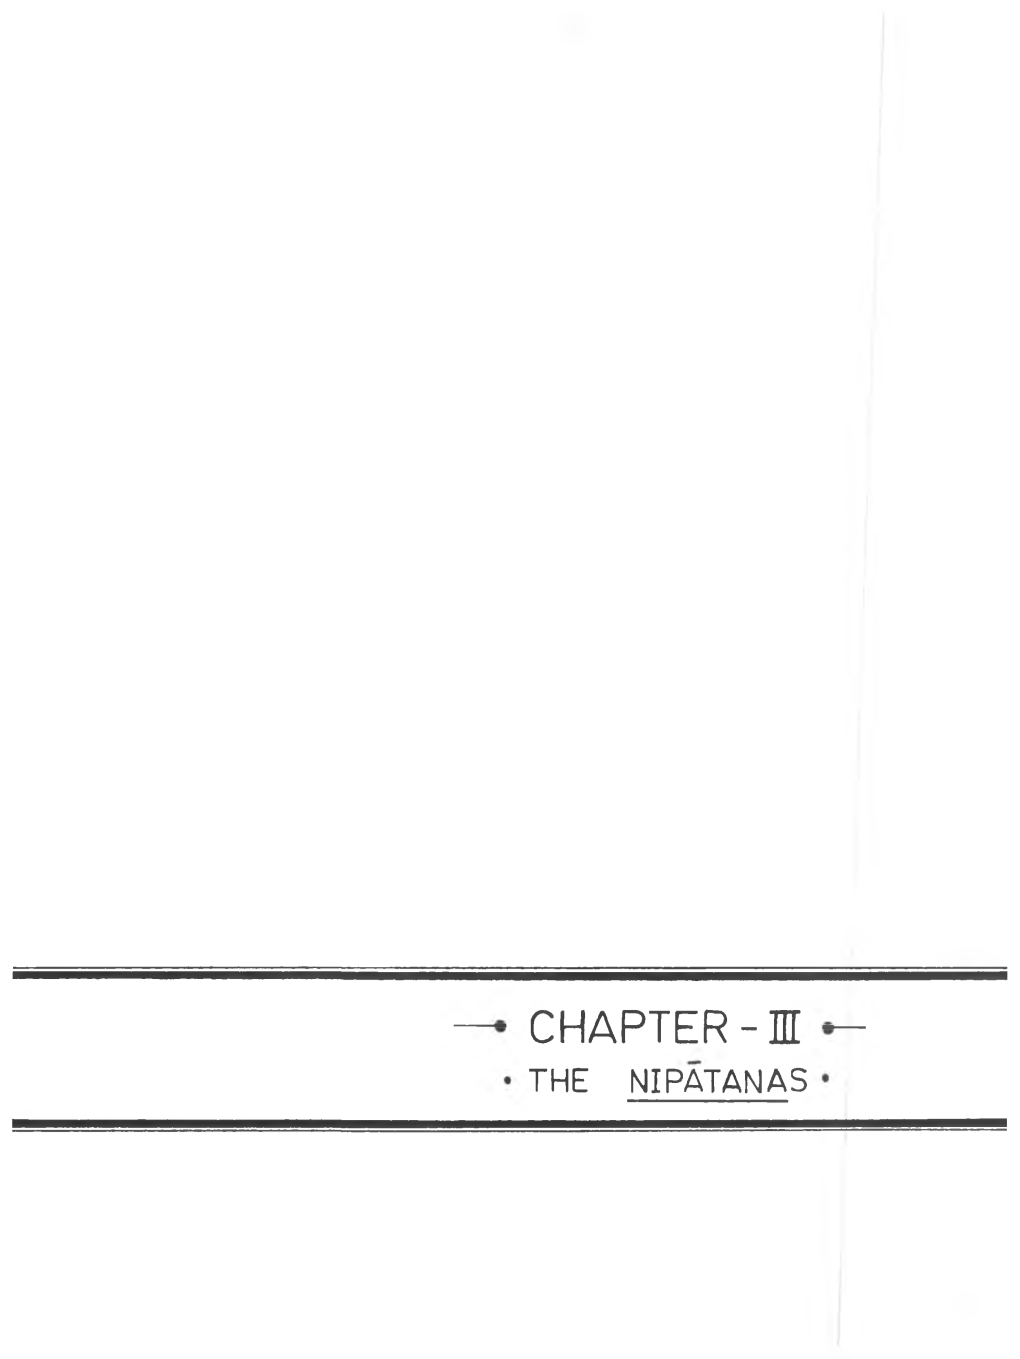 CHAPTER-1 the NIPATANAS 20 A